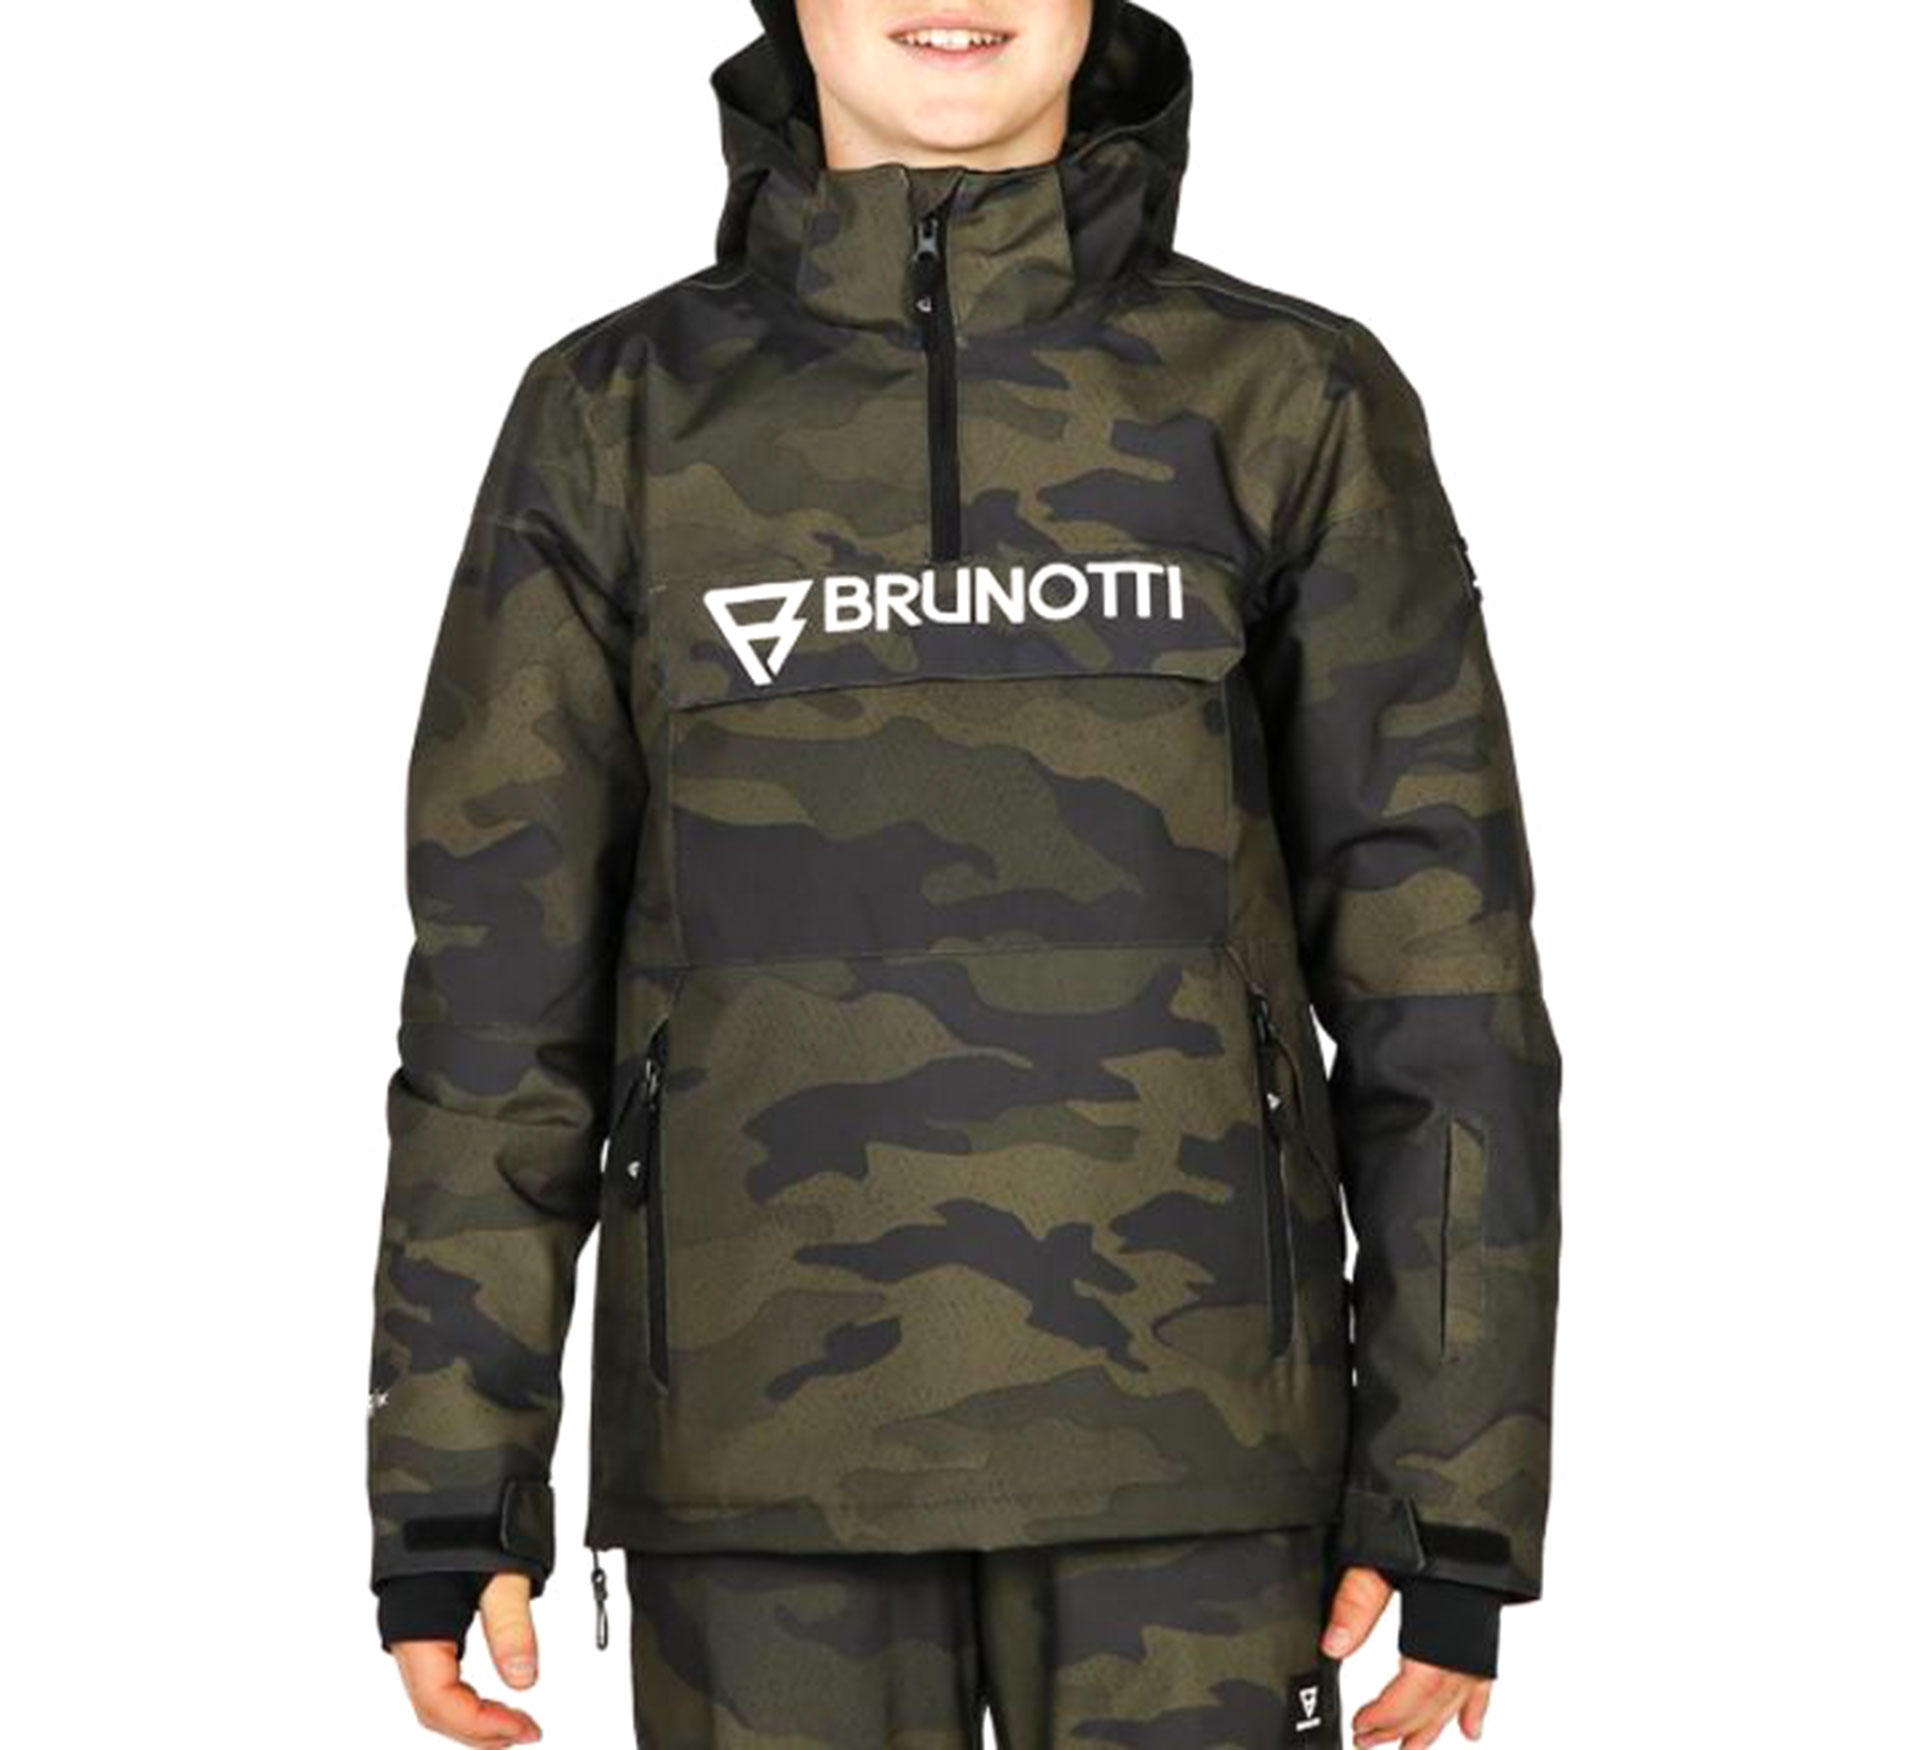 Brunotti Orin AO Manteau de ski Anorak Enfants